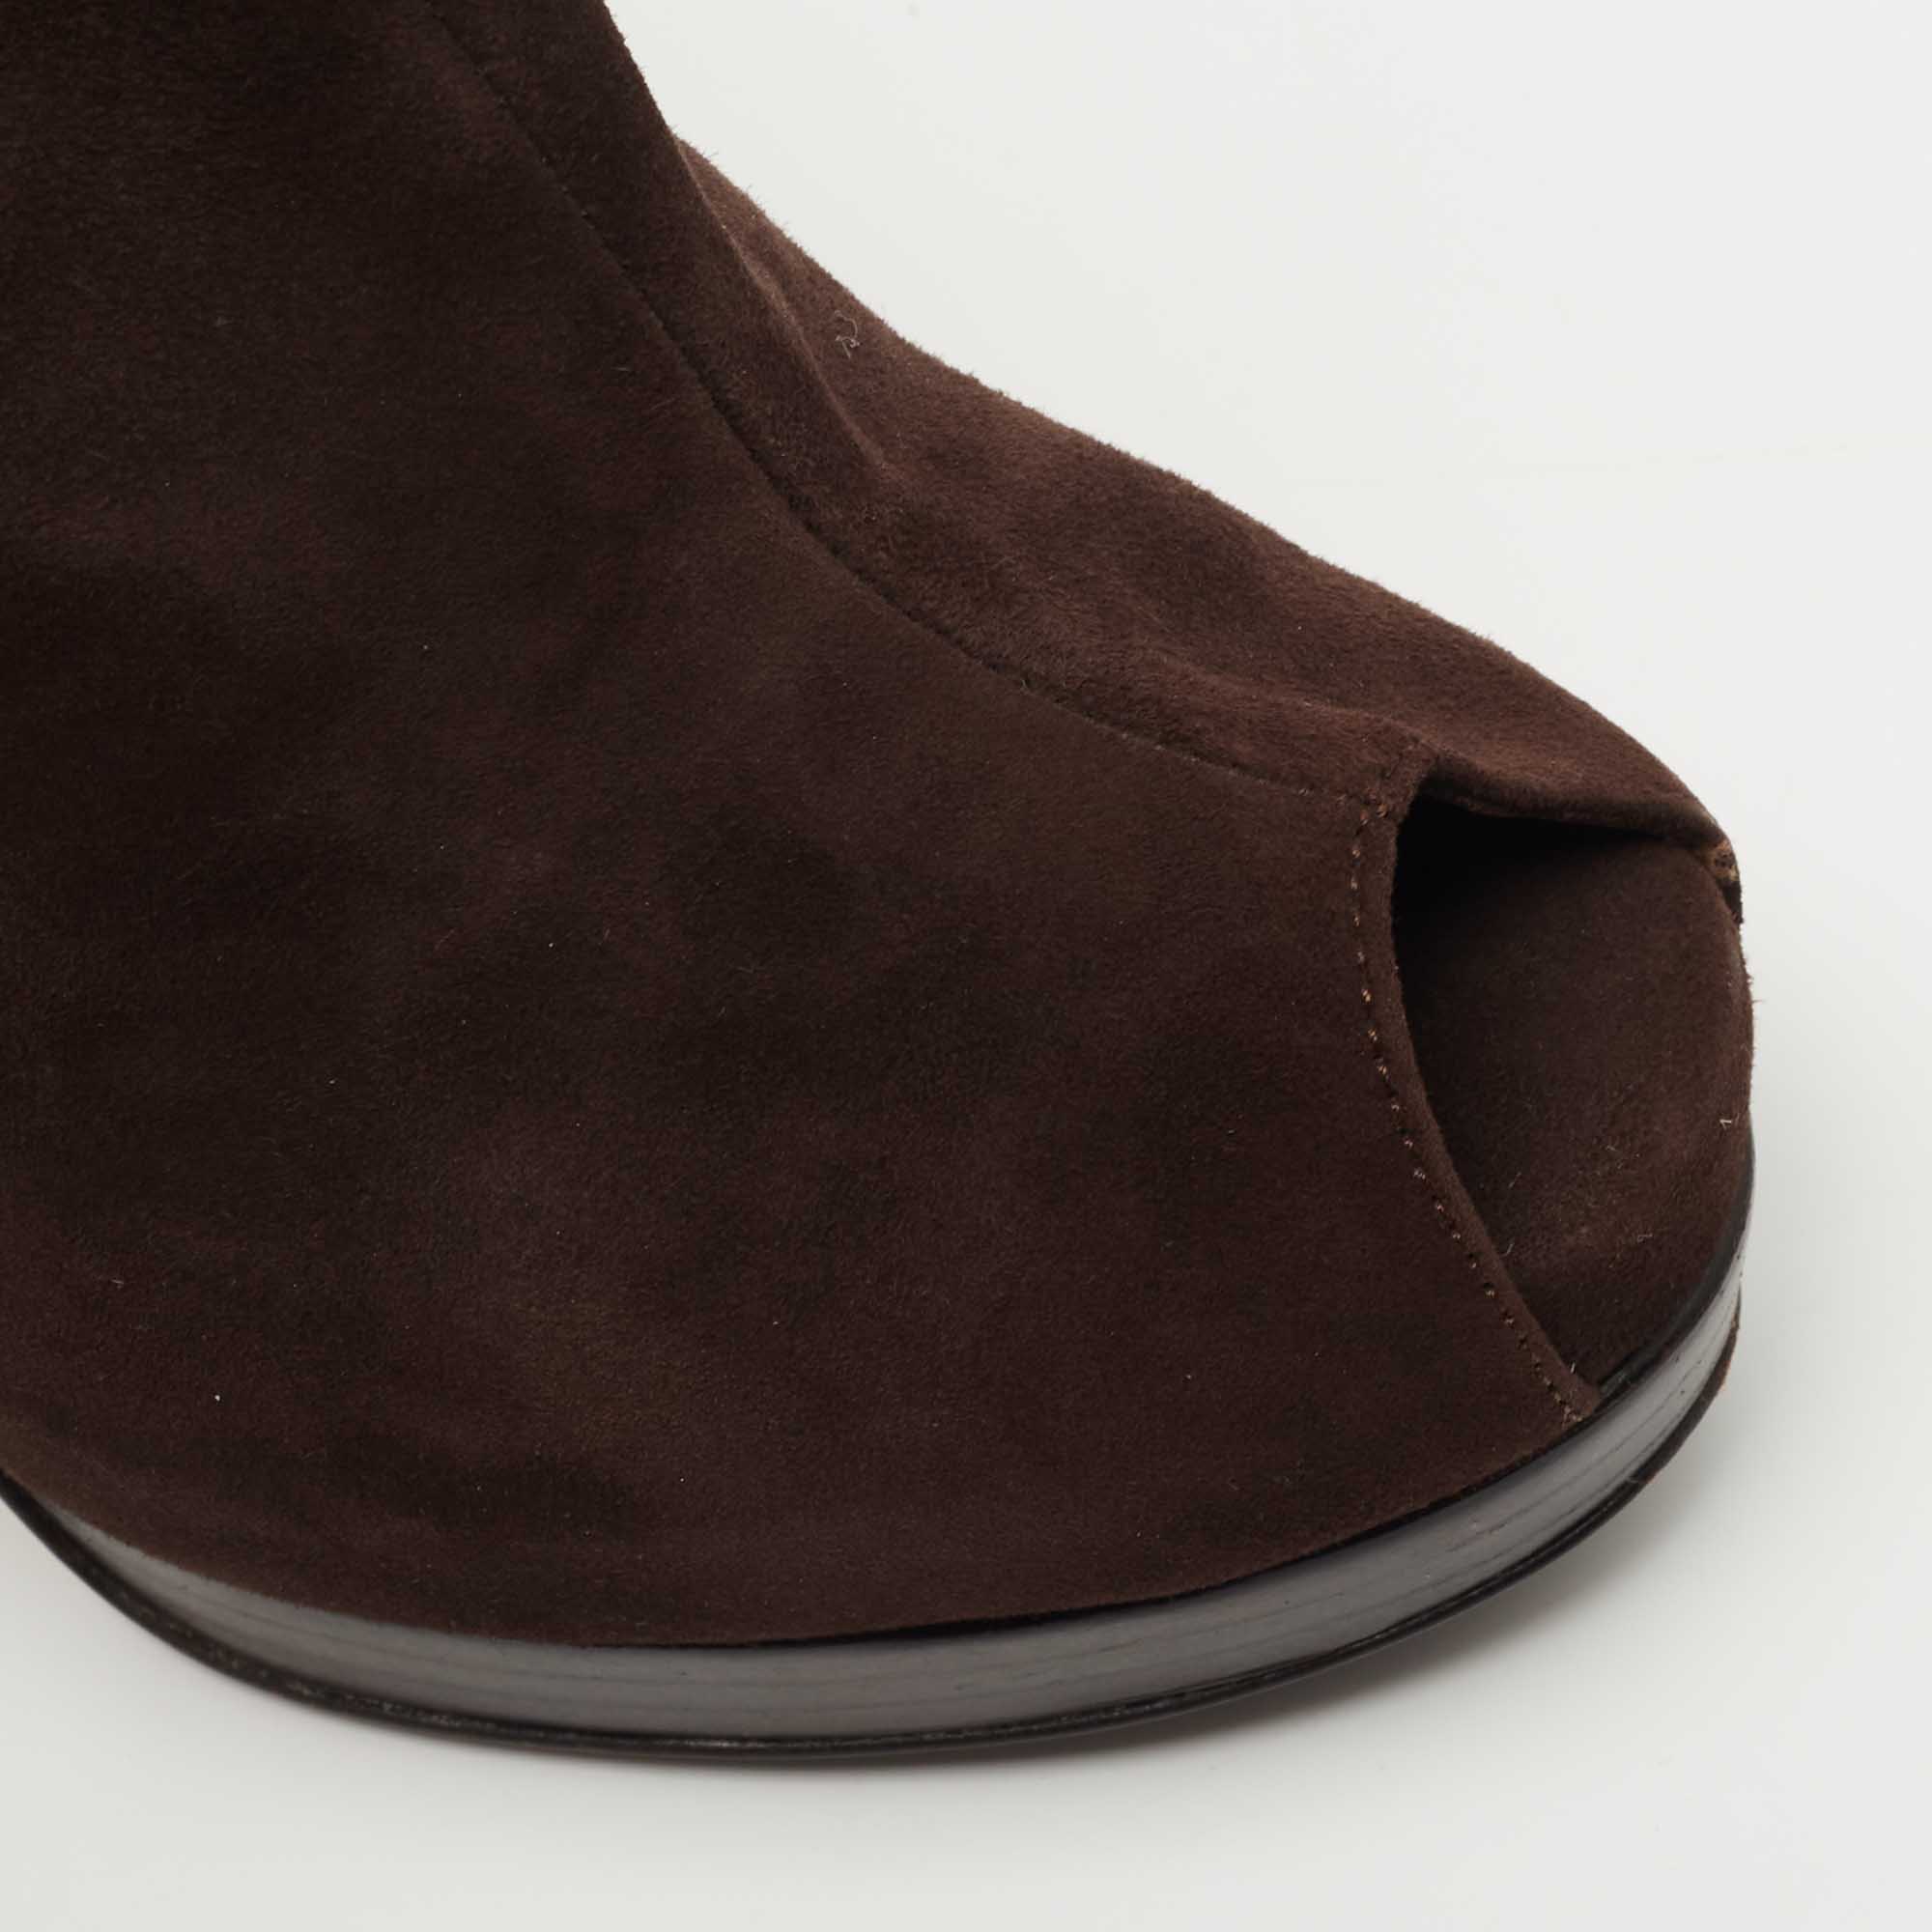 Fendi Brown Suede Peep Toe Platform Ankle Boots Size 36